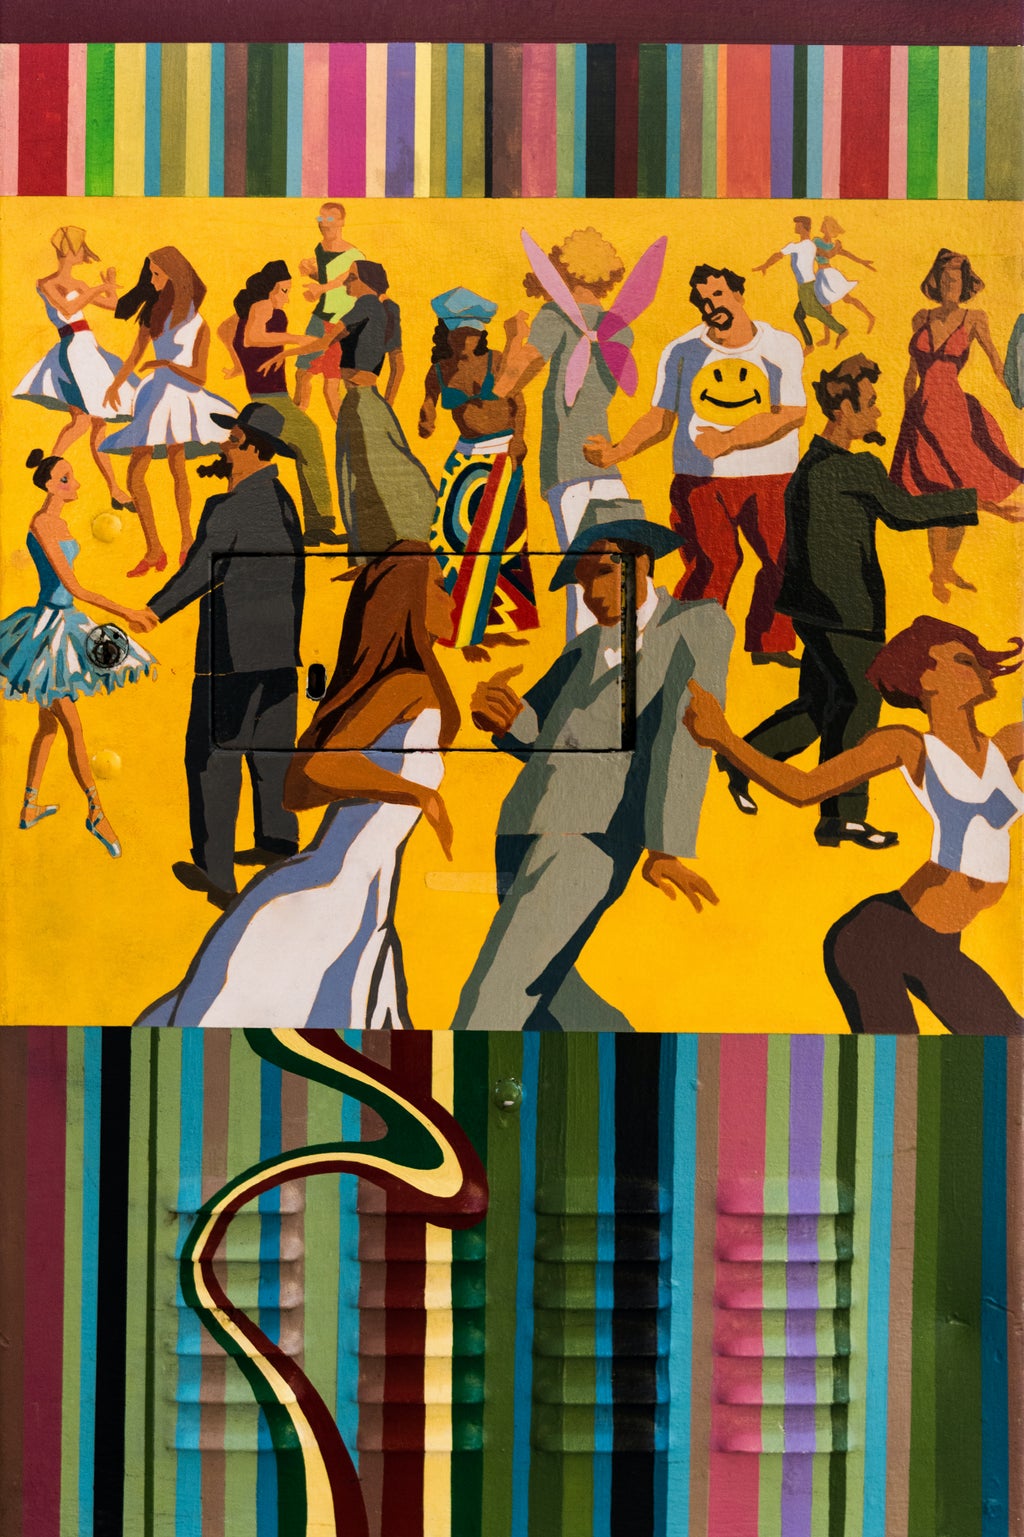 Image of artwork detailing various dance styles